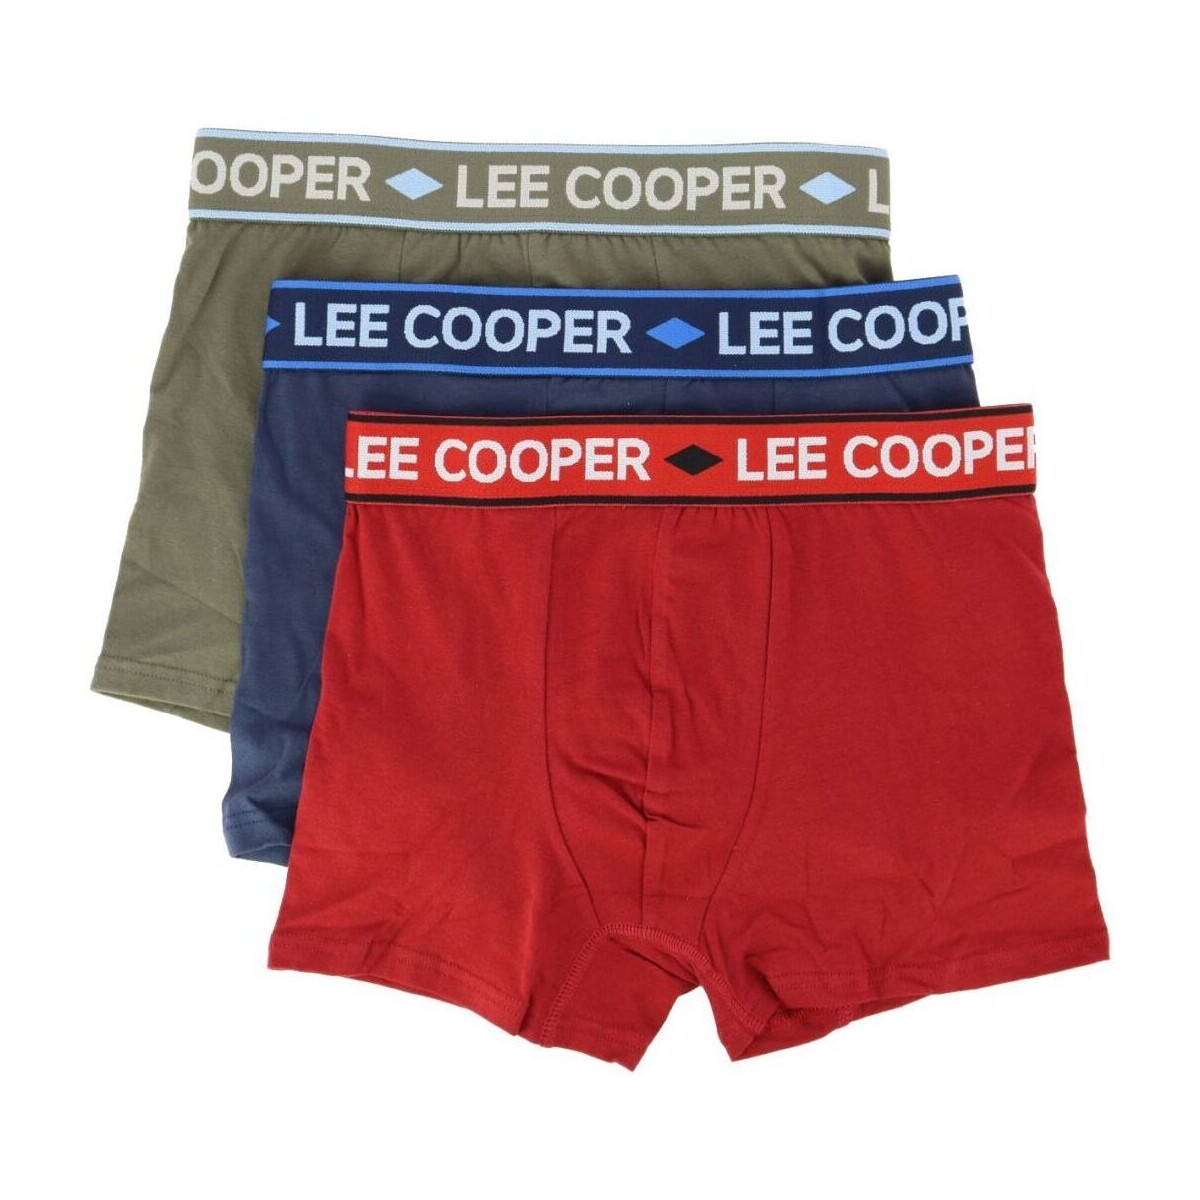 Lee Cooper Multicolore Boxer homme Natan peBt3S8f